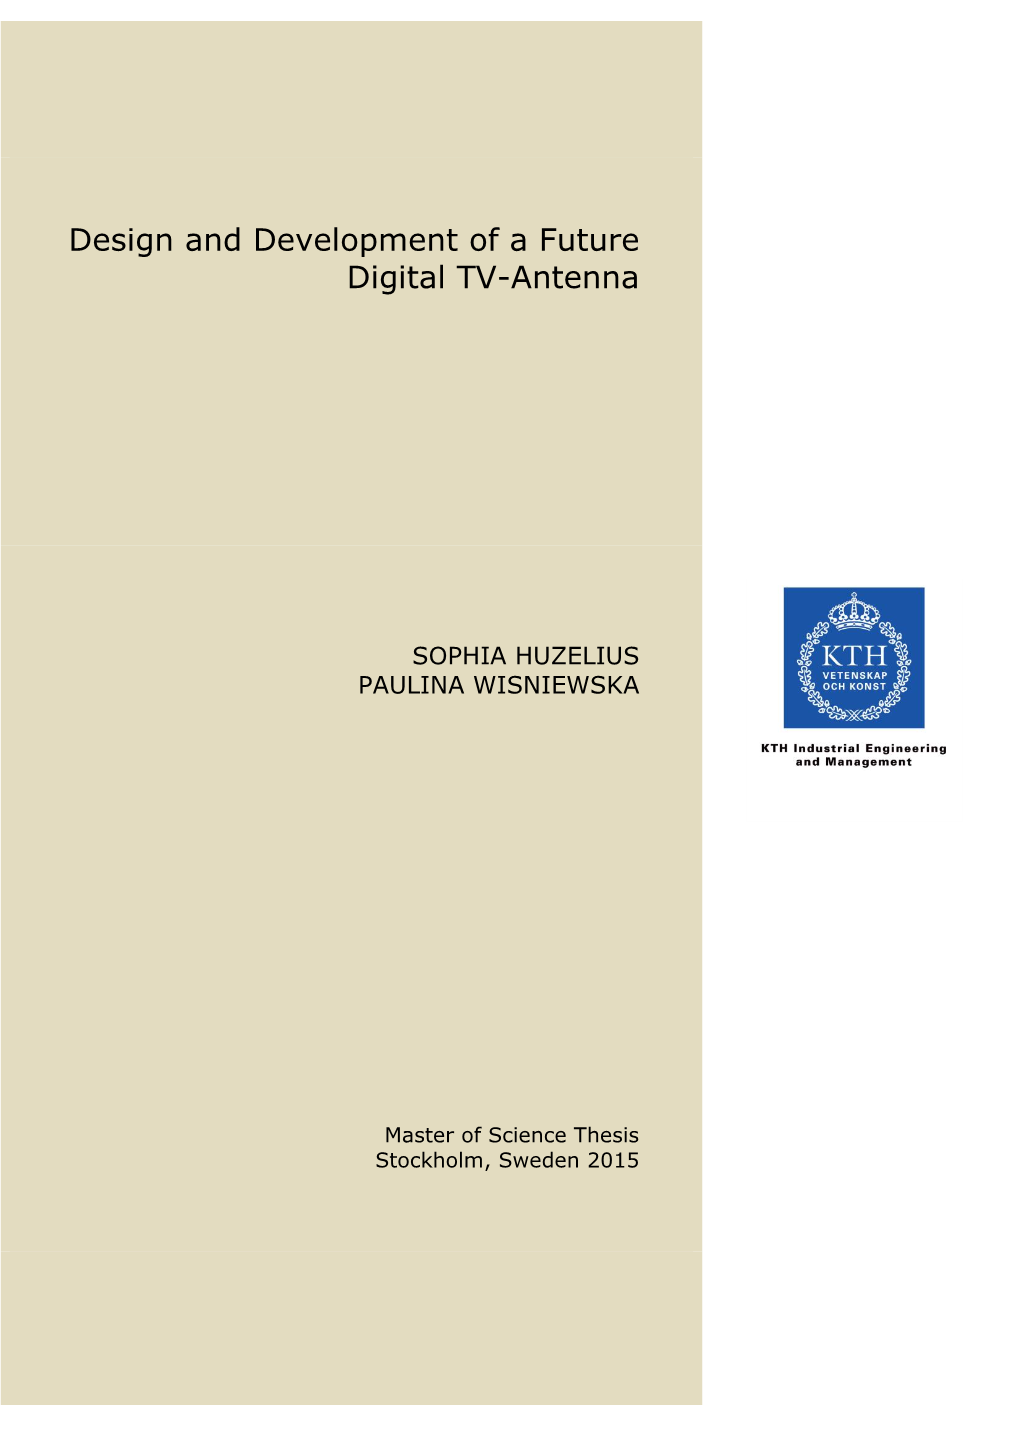 Design and Development of a Future Digital TV-Antenna